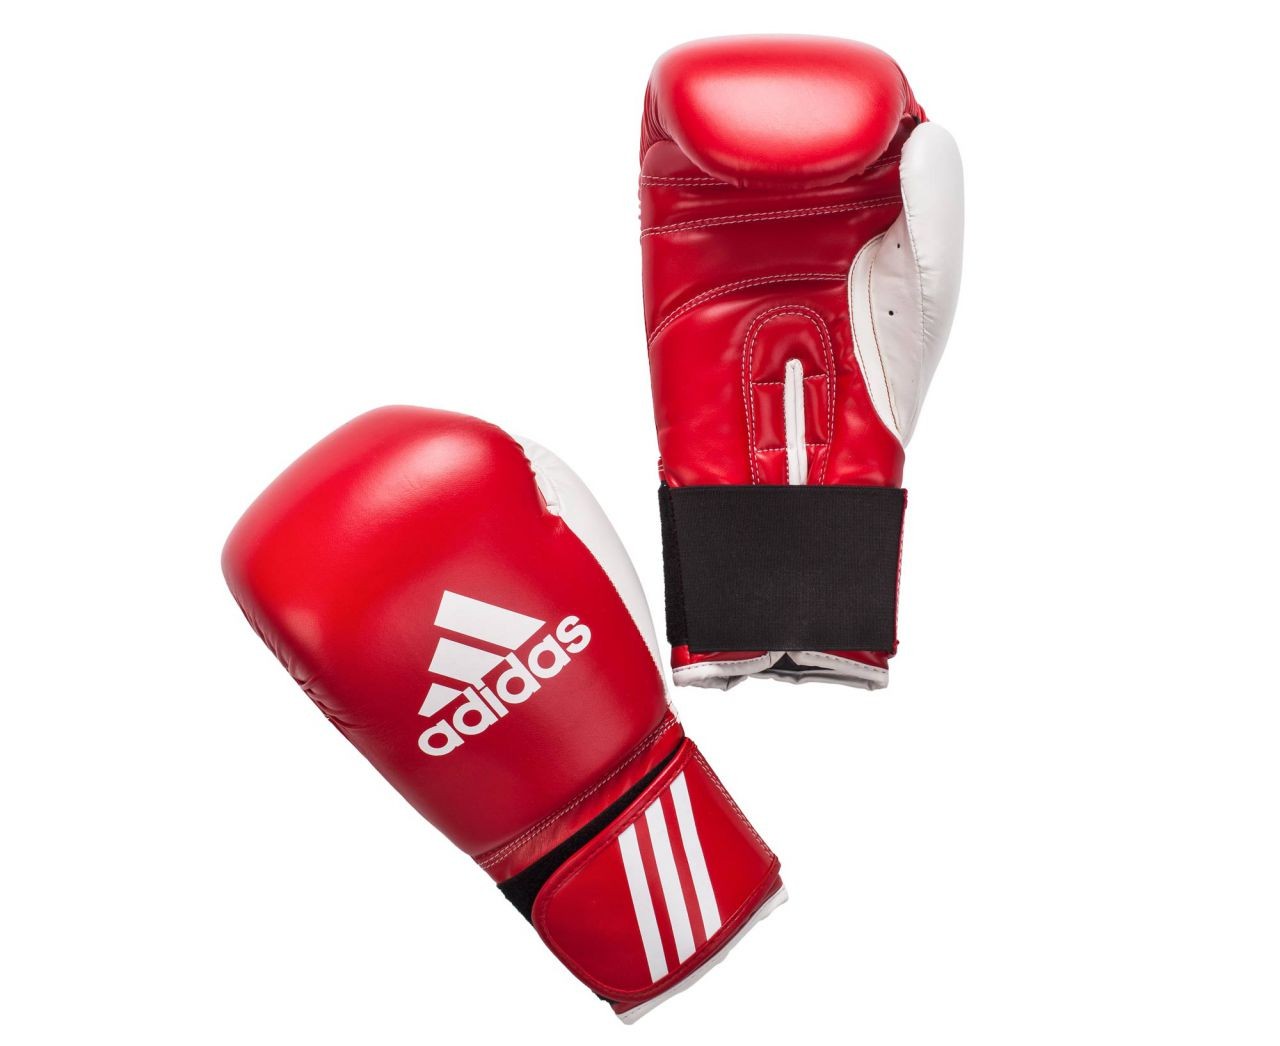 Перчатки боксерские adidas response красно-белые adibto1